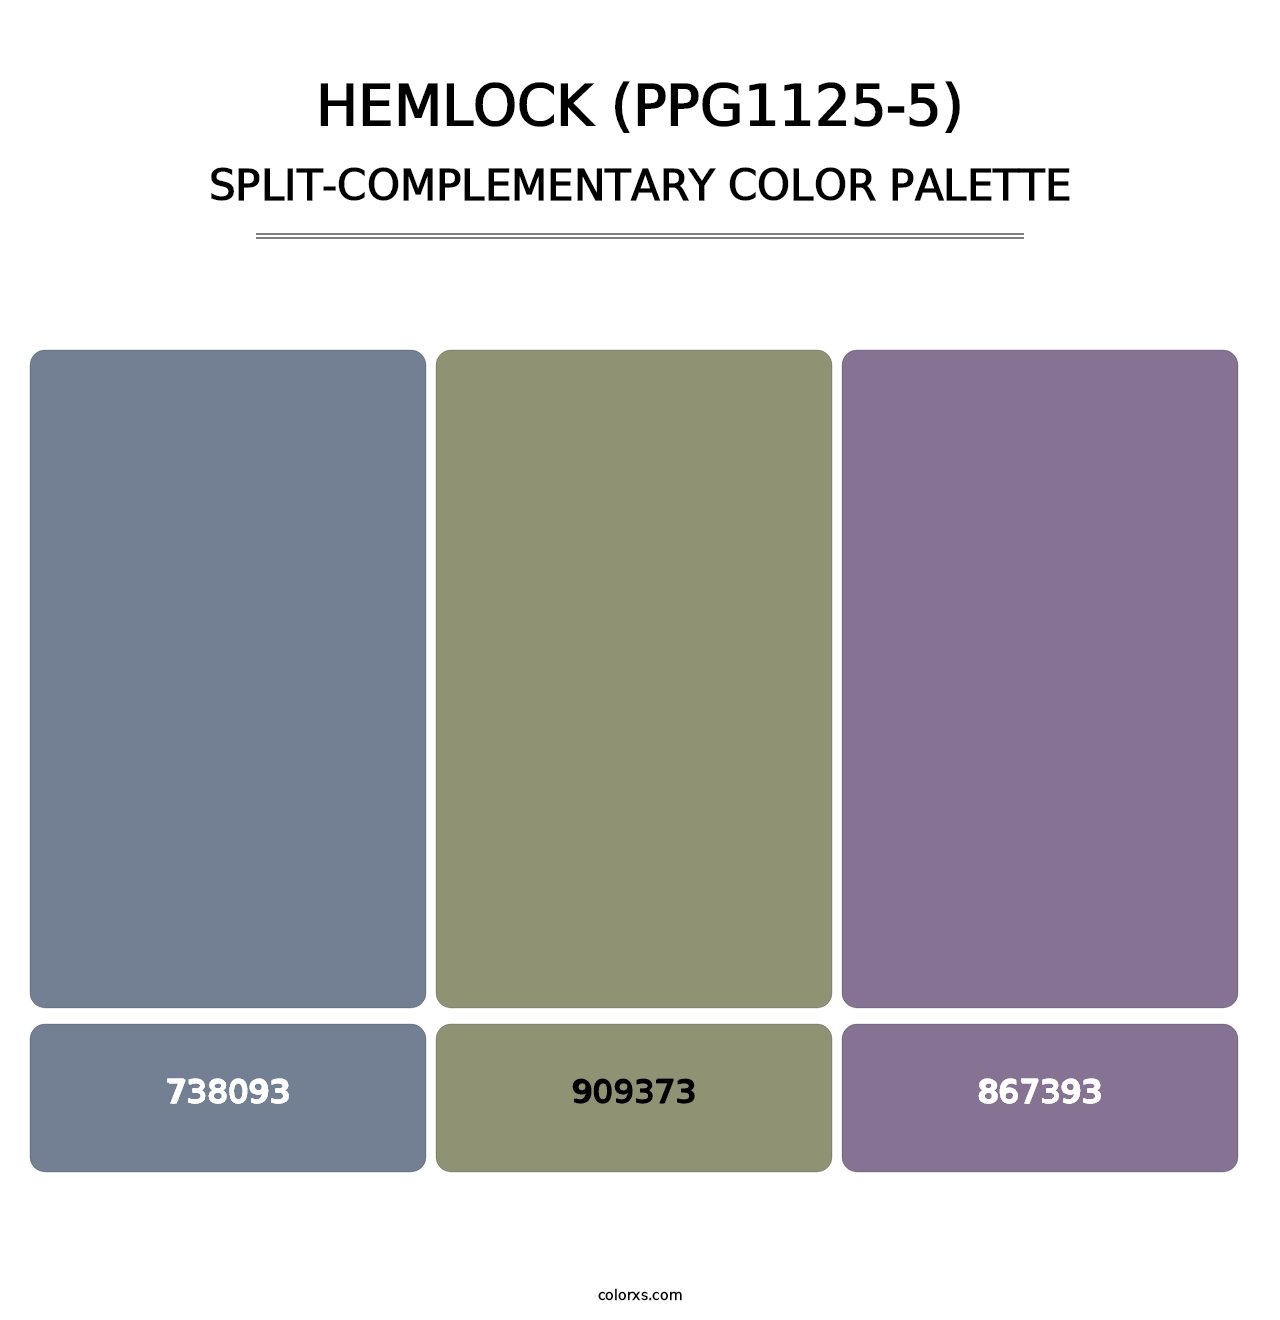 Hemlock (PPG1125-5) - Split-Complementary Color Palette